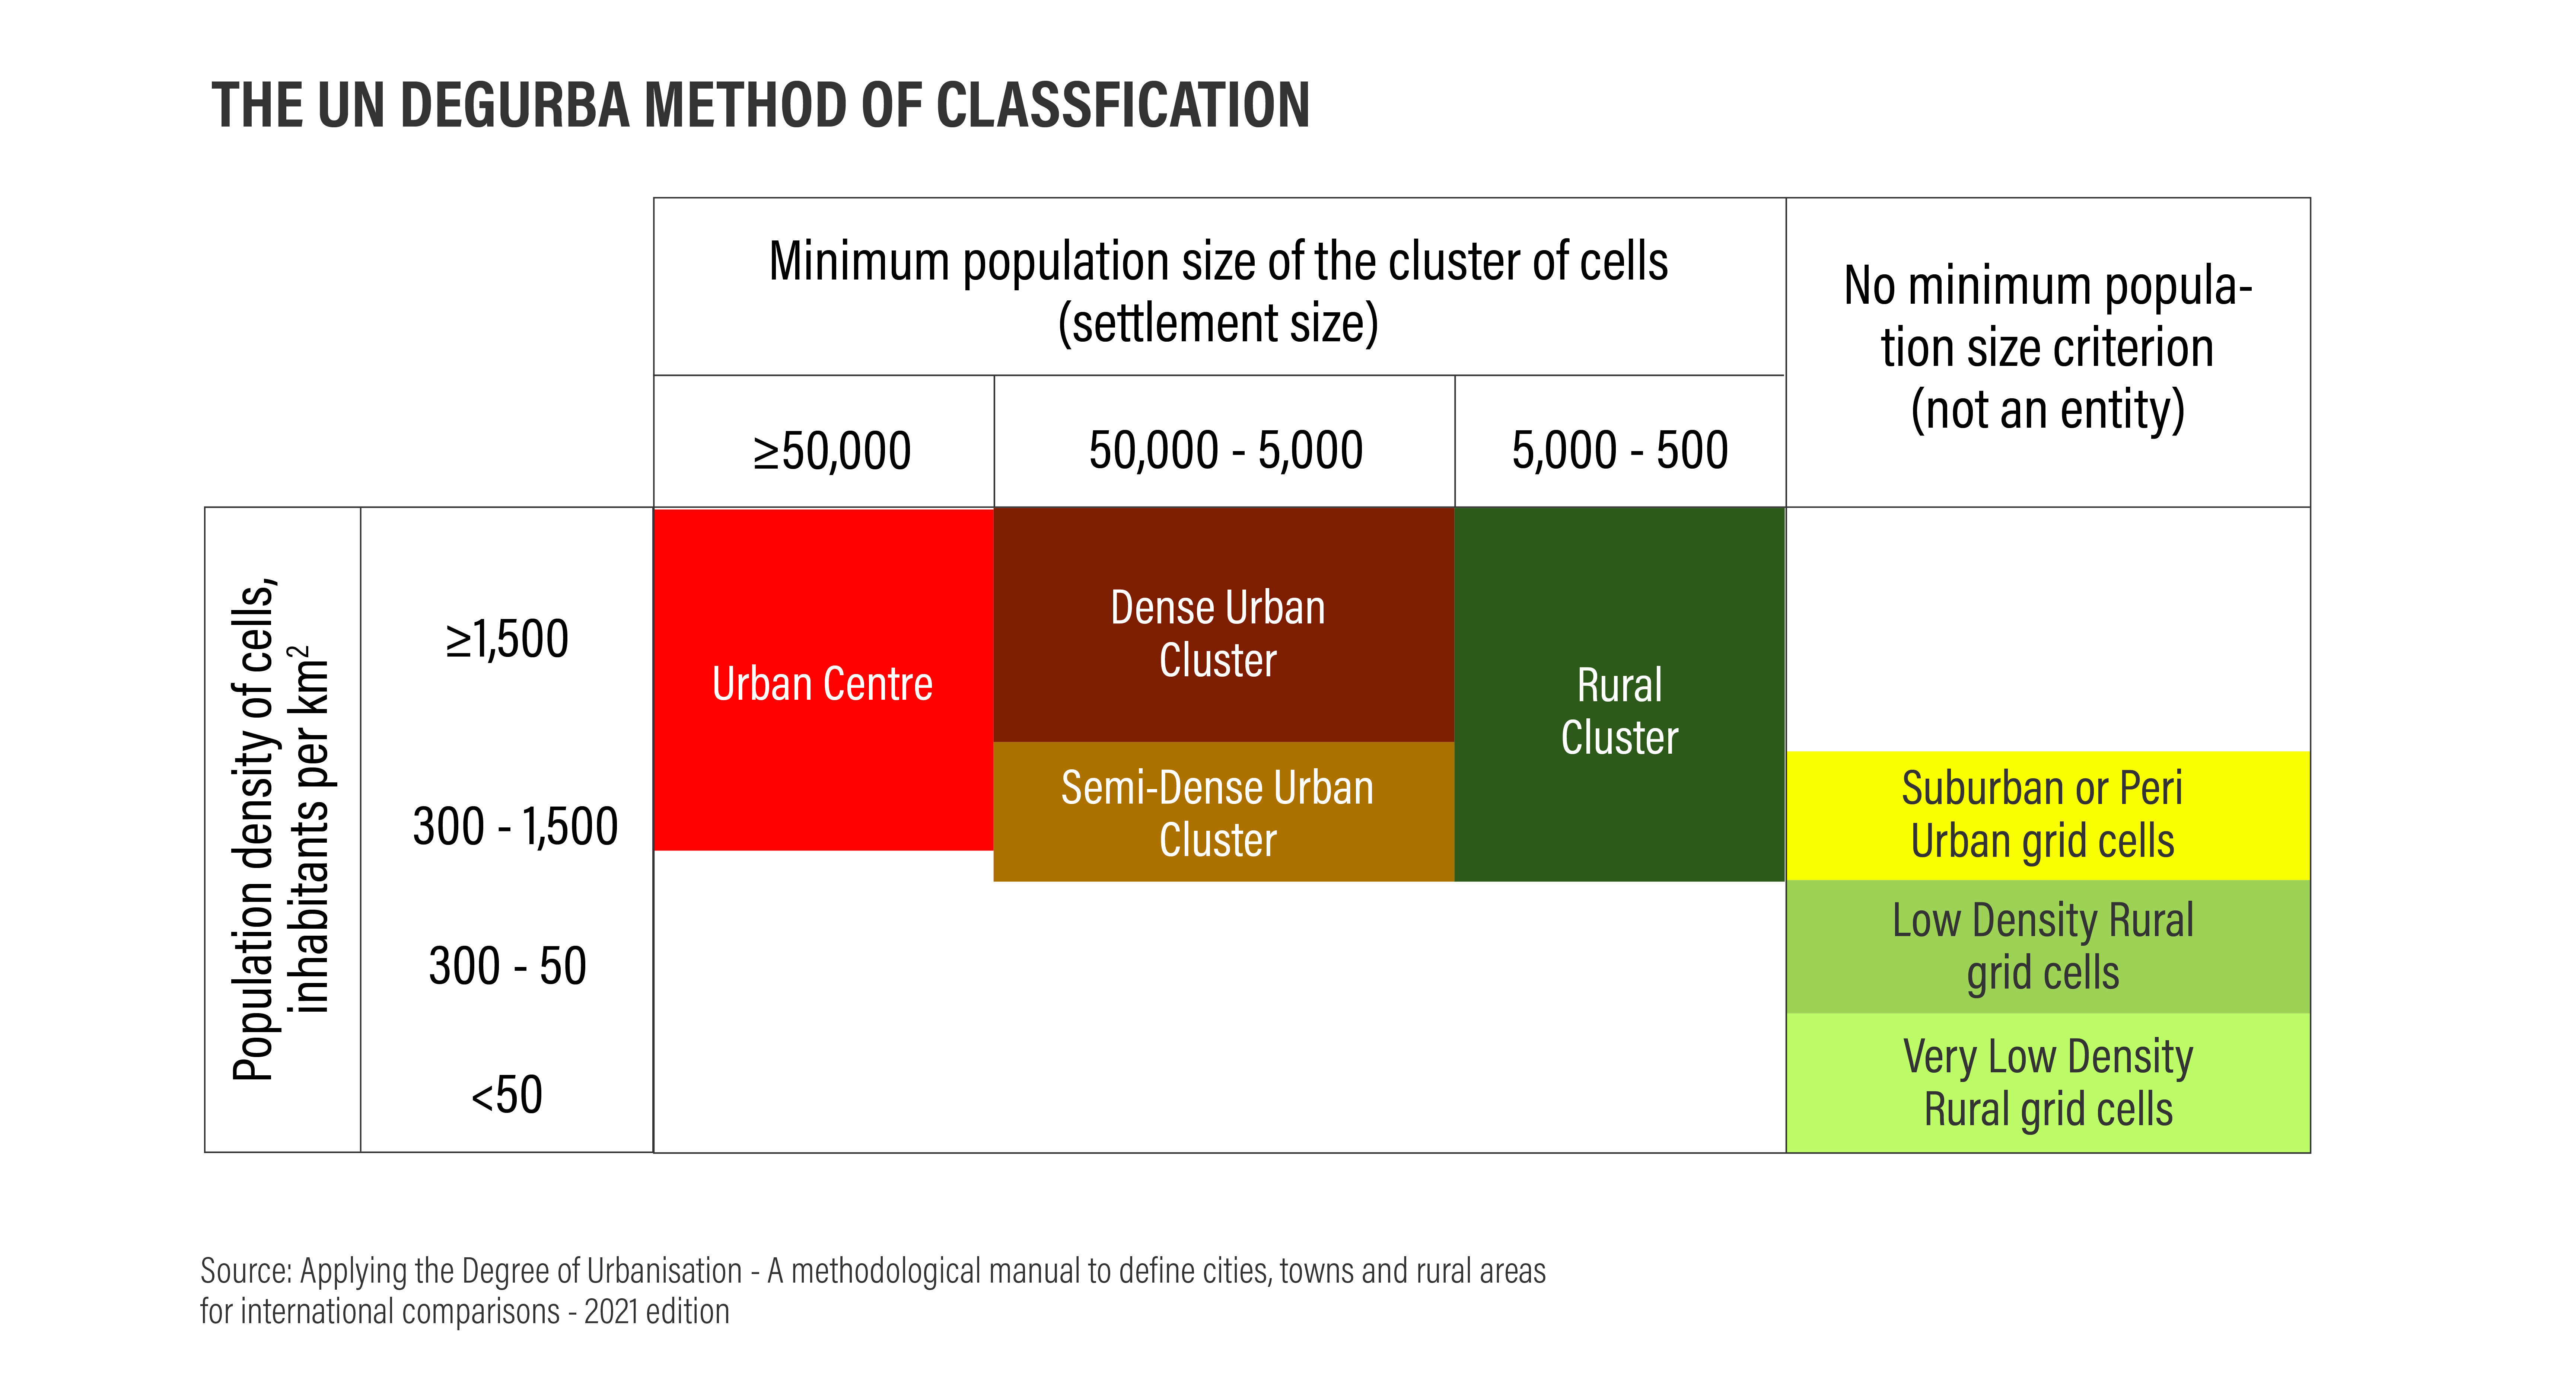 Figure 4: UN DEGURBA Method of Classification